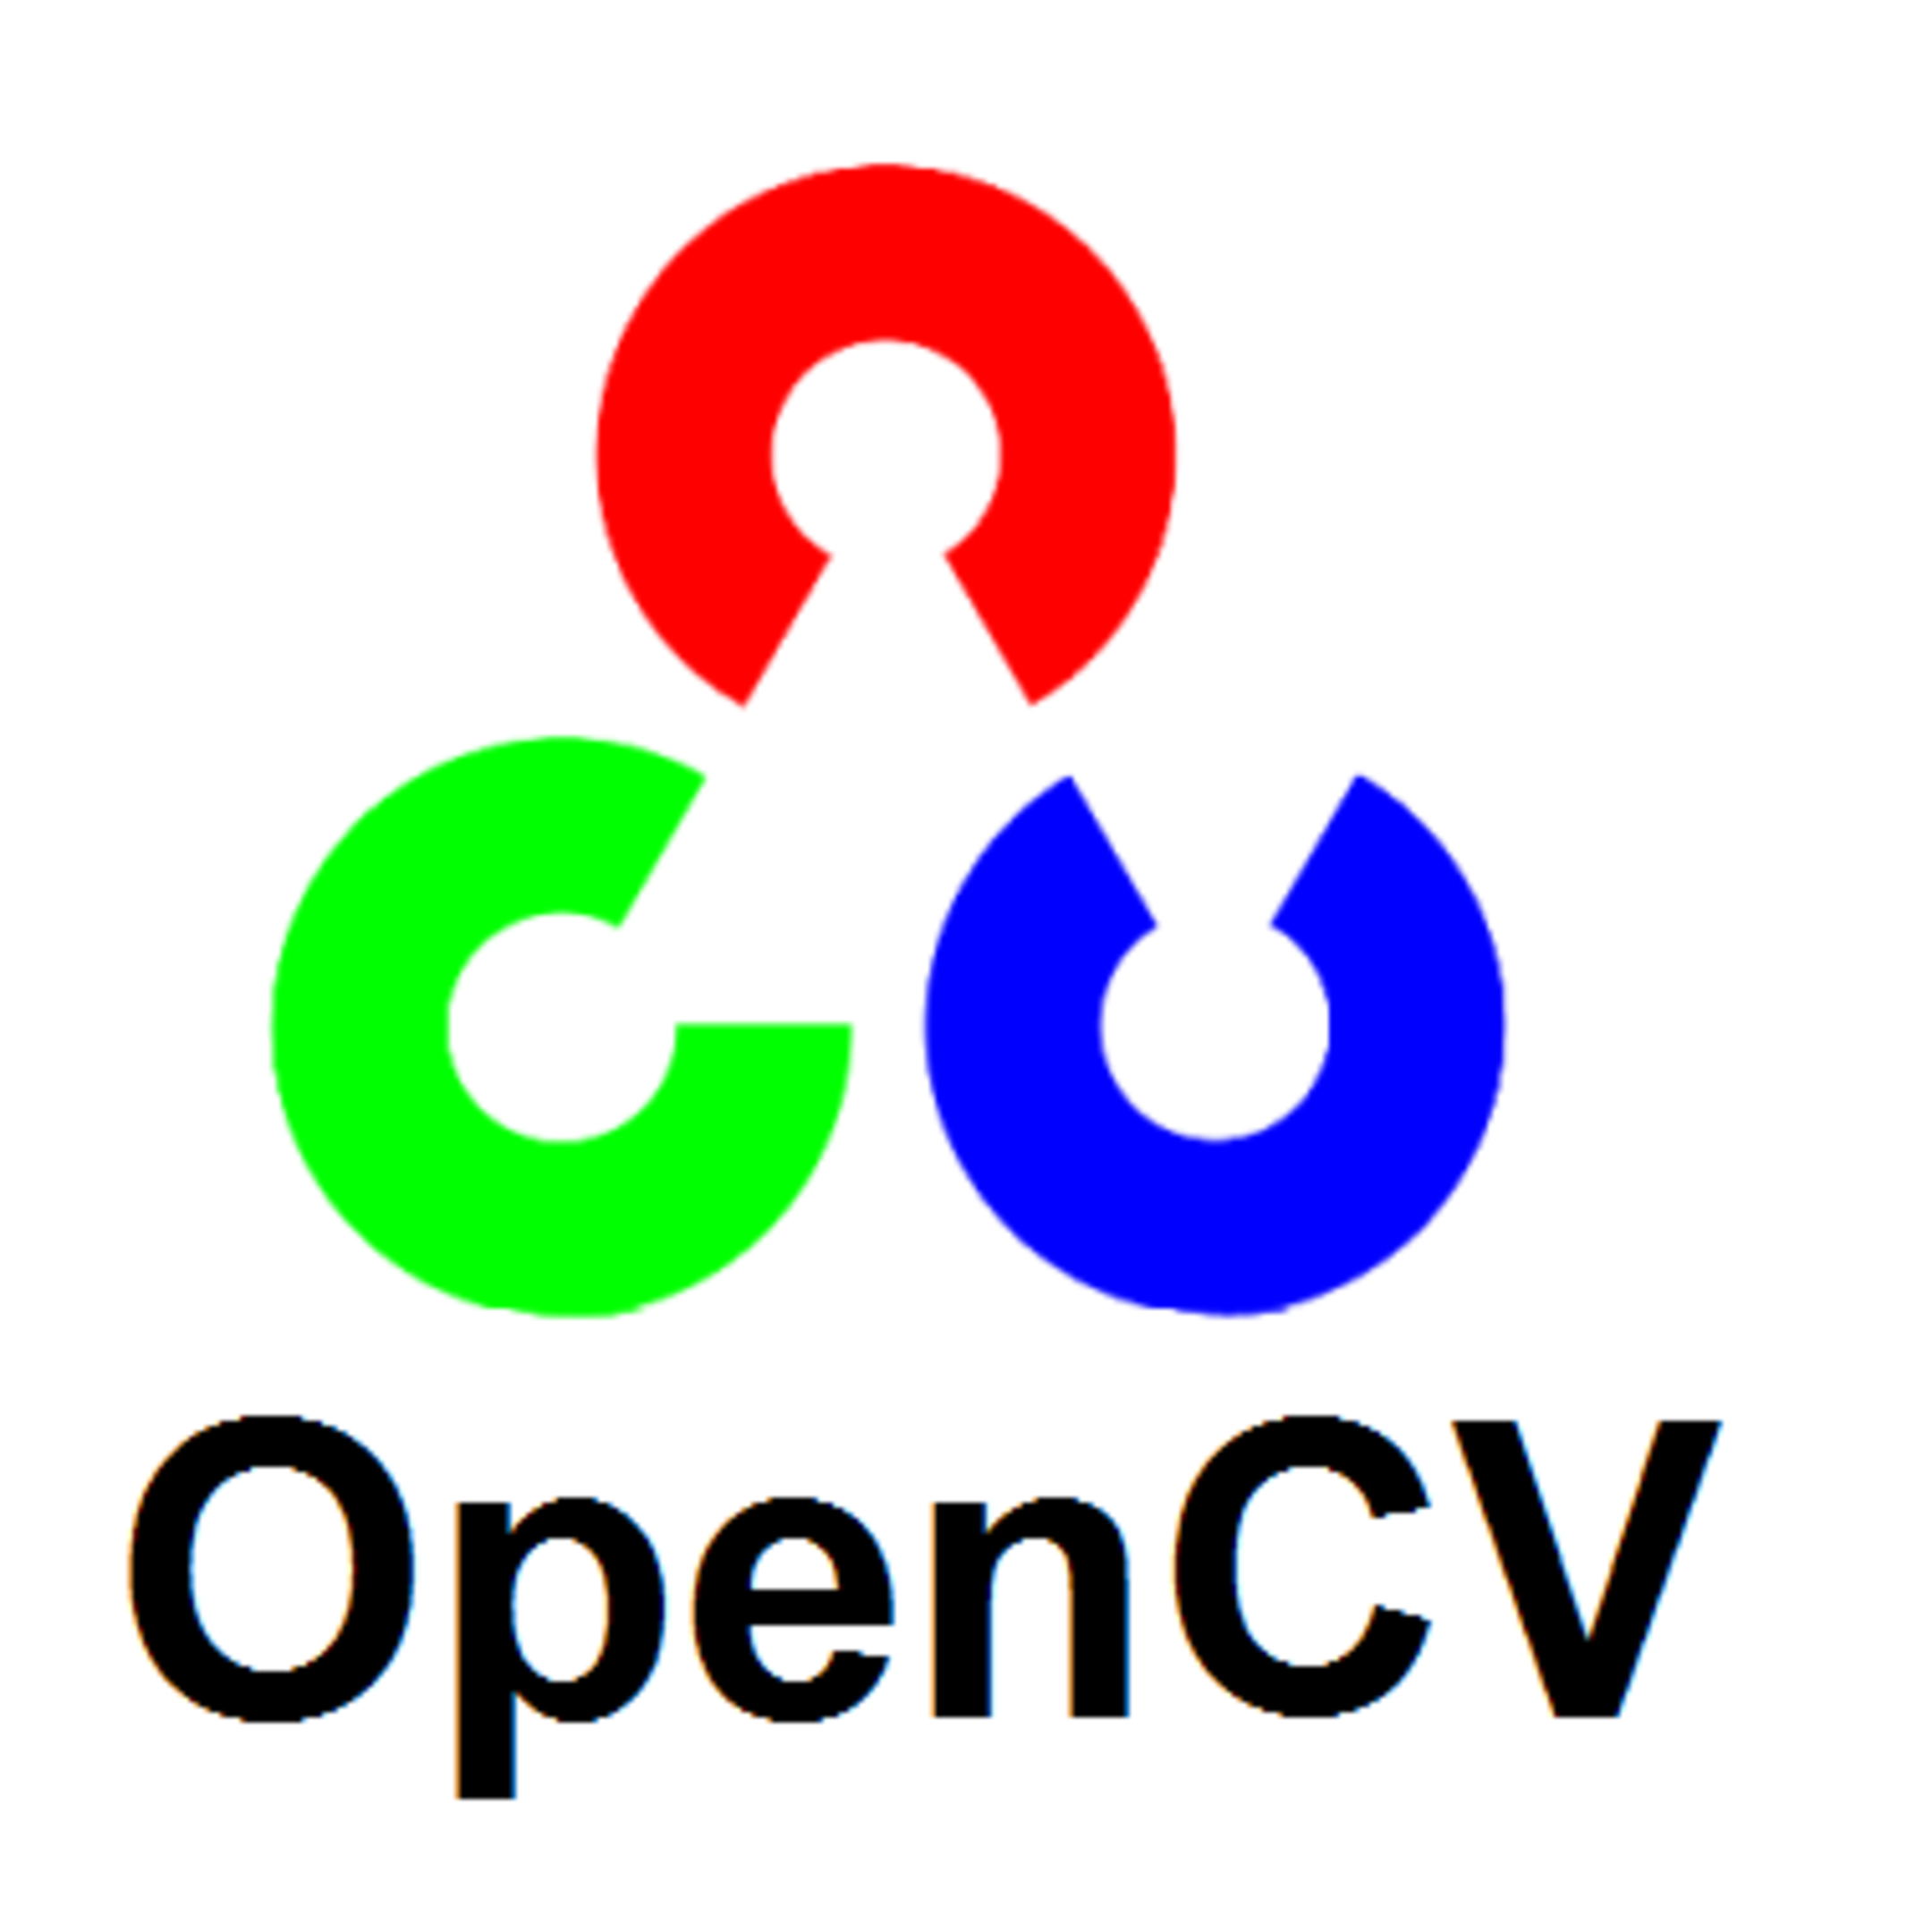 【opencv自学】pythonopencv简介、安装、图像基本操作，平移、缩放、画线、画圆、画矩形、画文字、图像混合等1-20 - 知乎